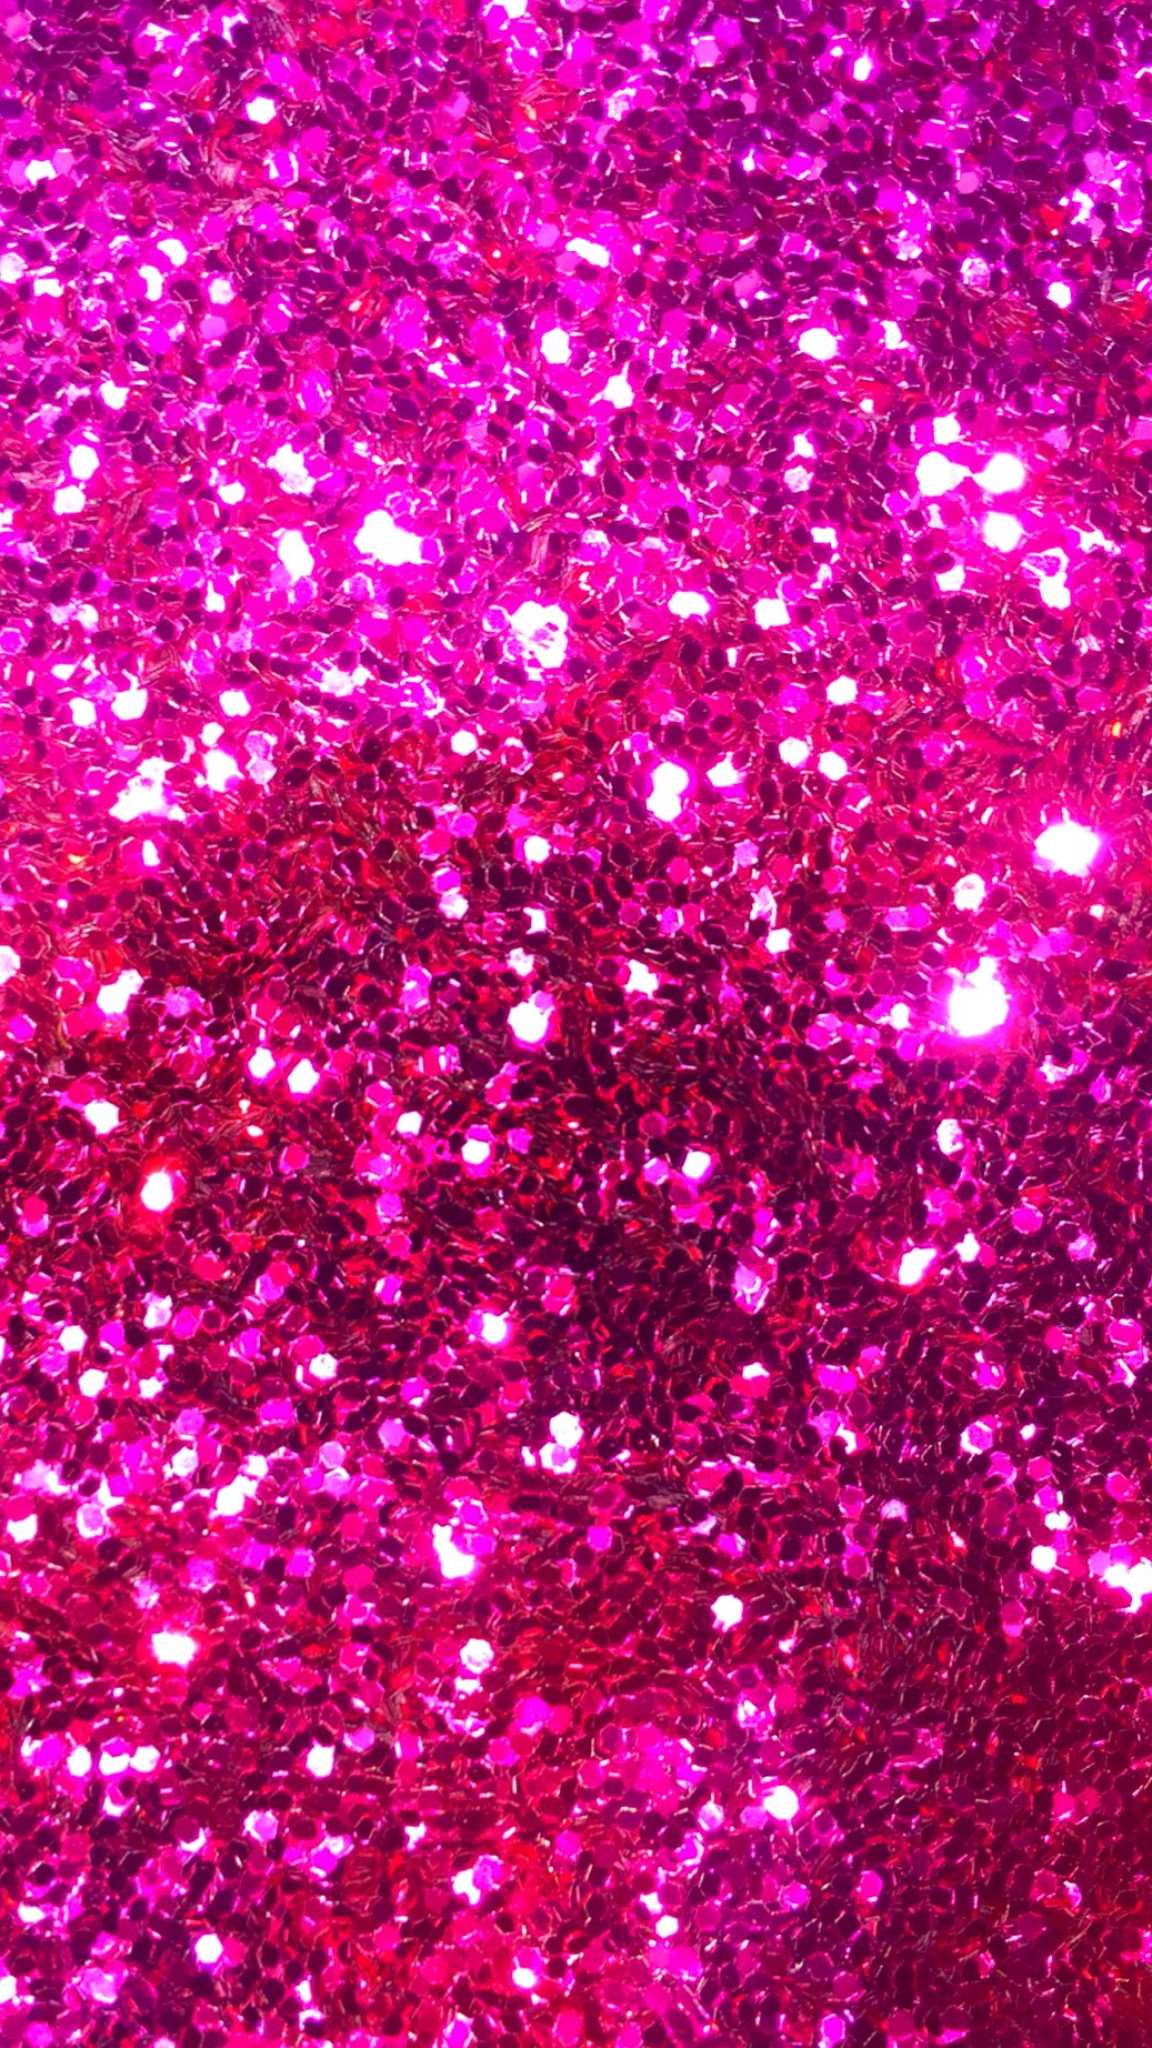 1152x2048 Colorful glitter phone wallpaper sparkle background pink shimmer bling | Fondos de pantalla de iphone, Fondos de brillos, Mariposas fondos de pantalla